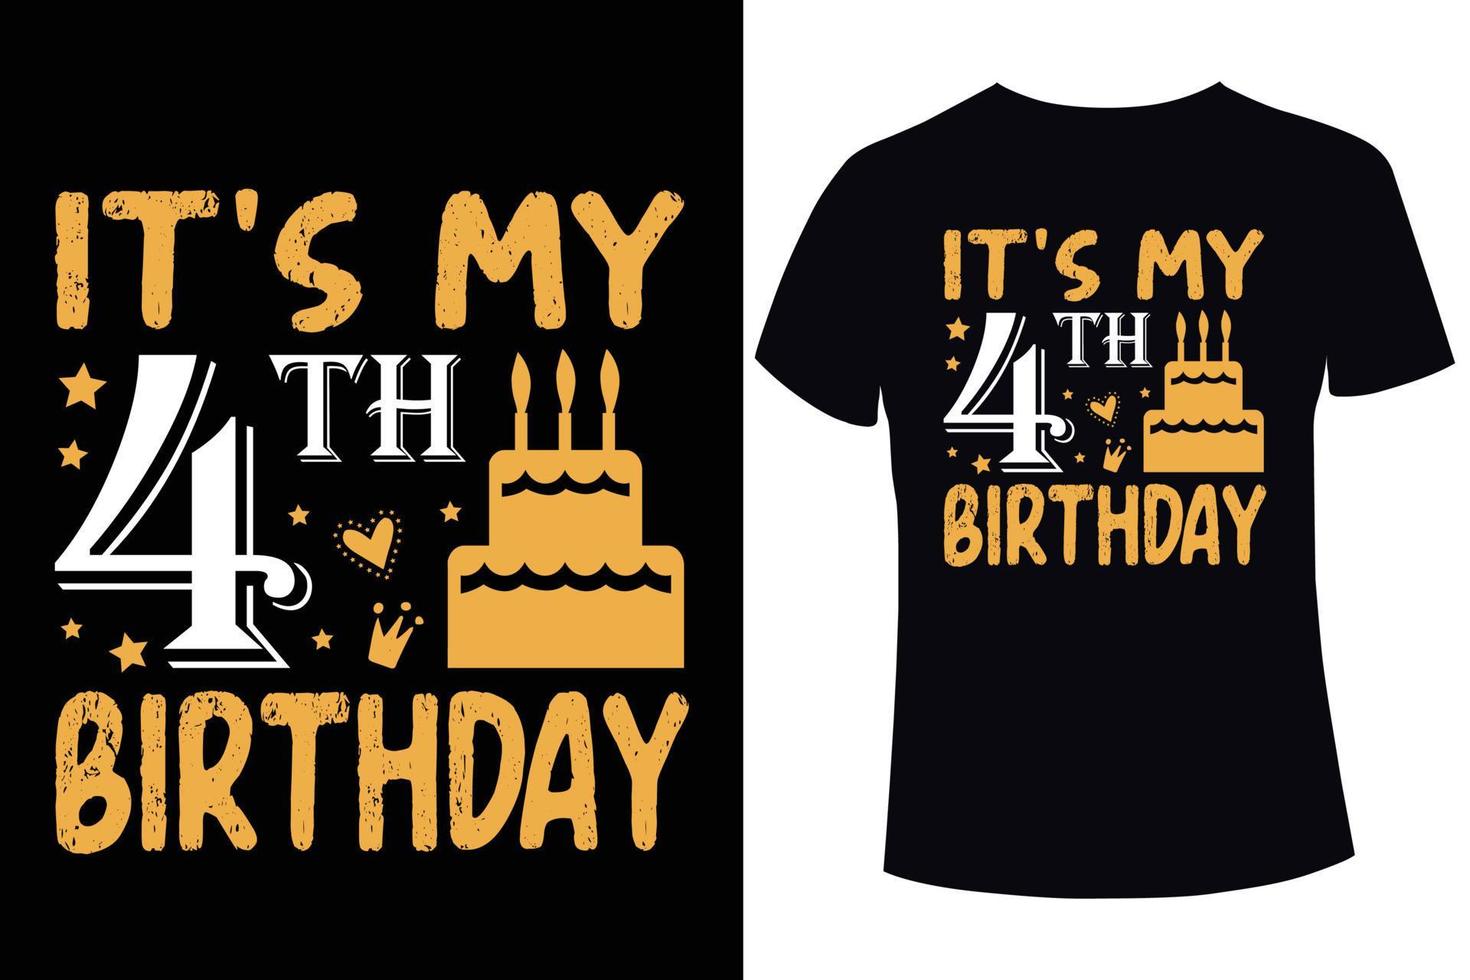 It's my 4th birthday t-shirt design template vector